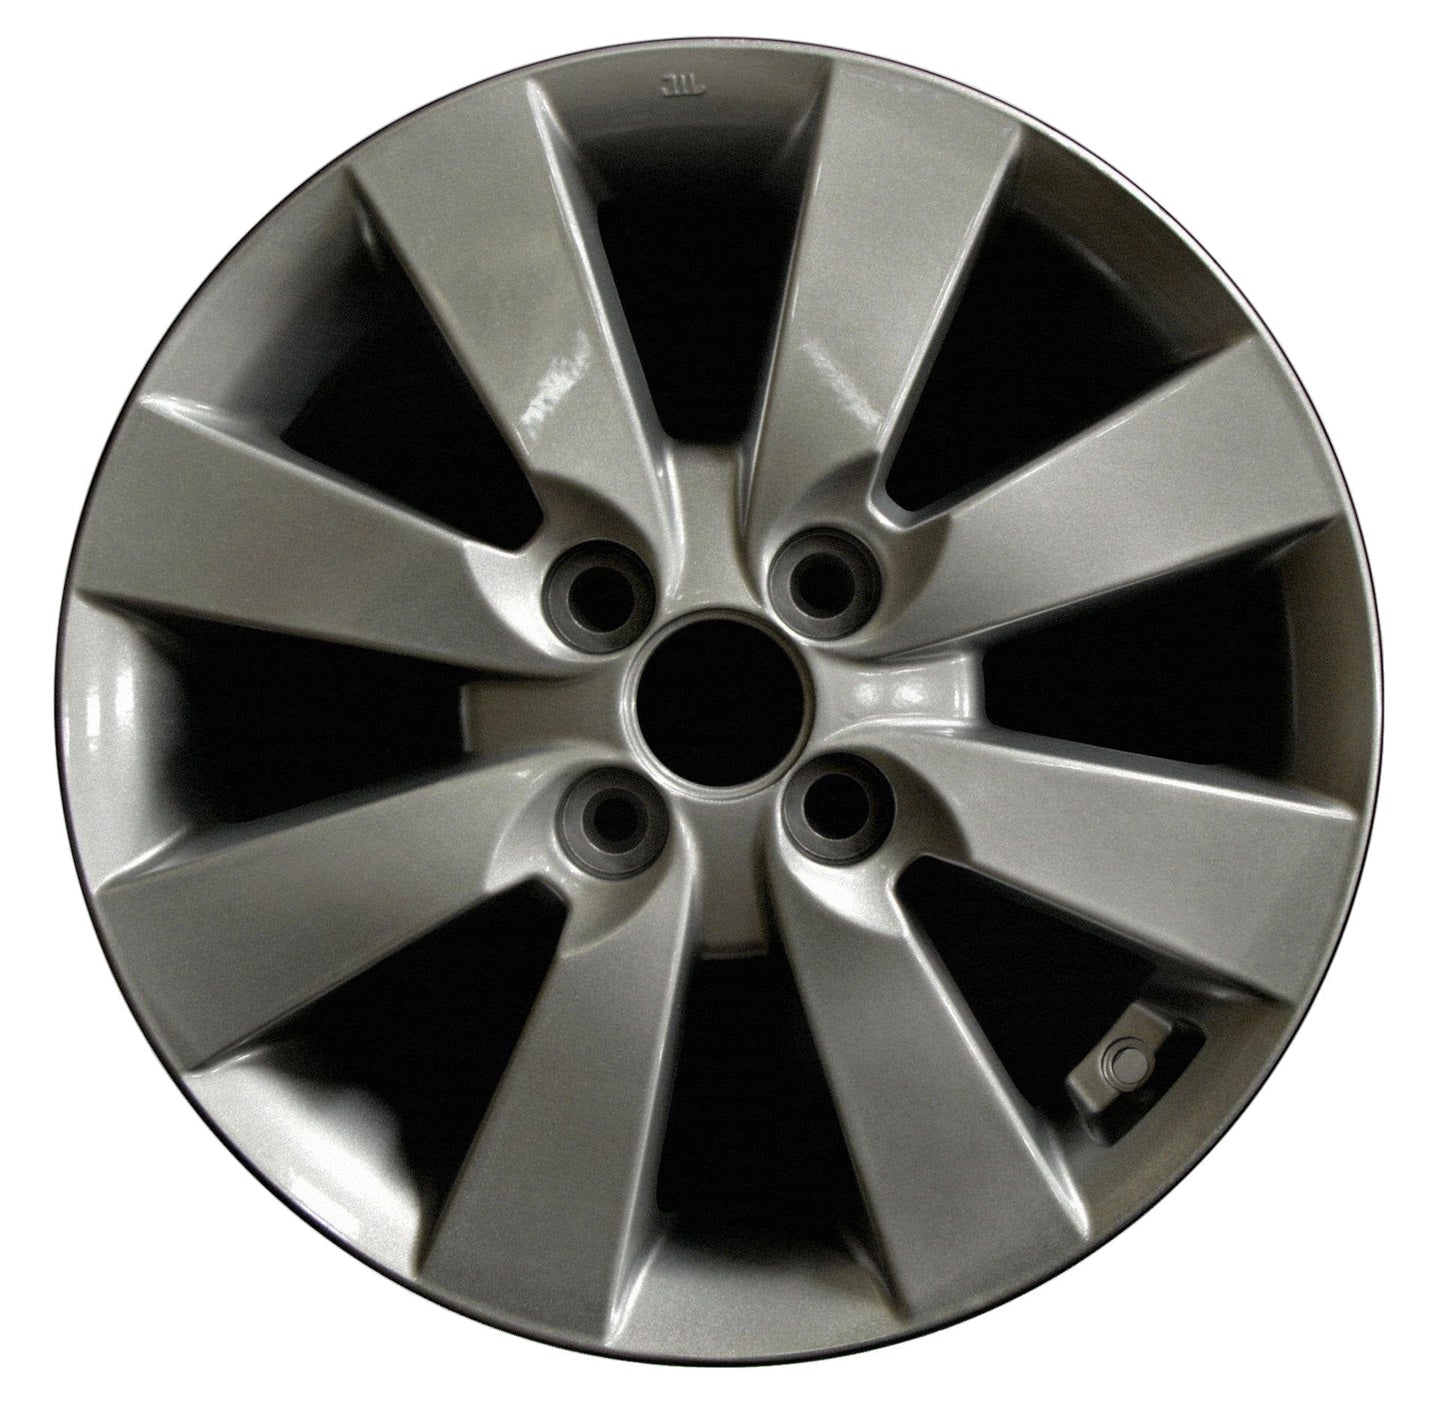 Kia Rio  2010, 2011 Factory OEM Car Wheel Size 15x5.5 Alloy WAO.150017.PS01.FF